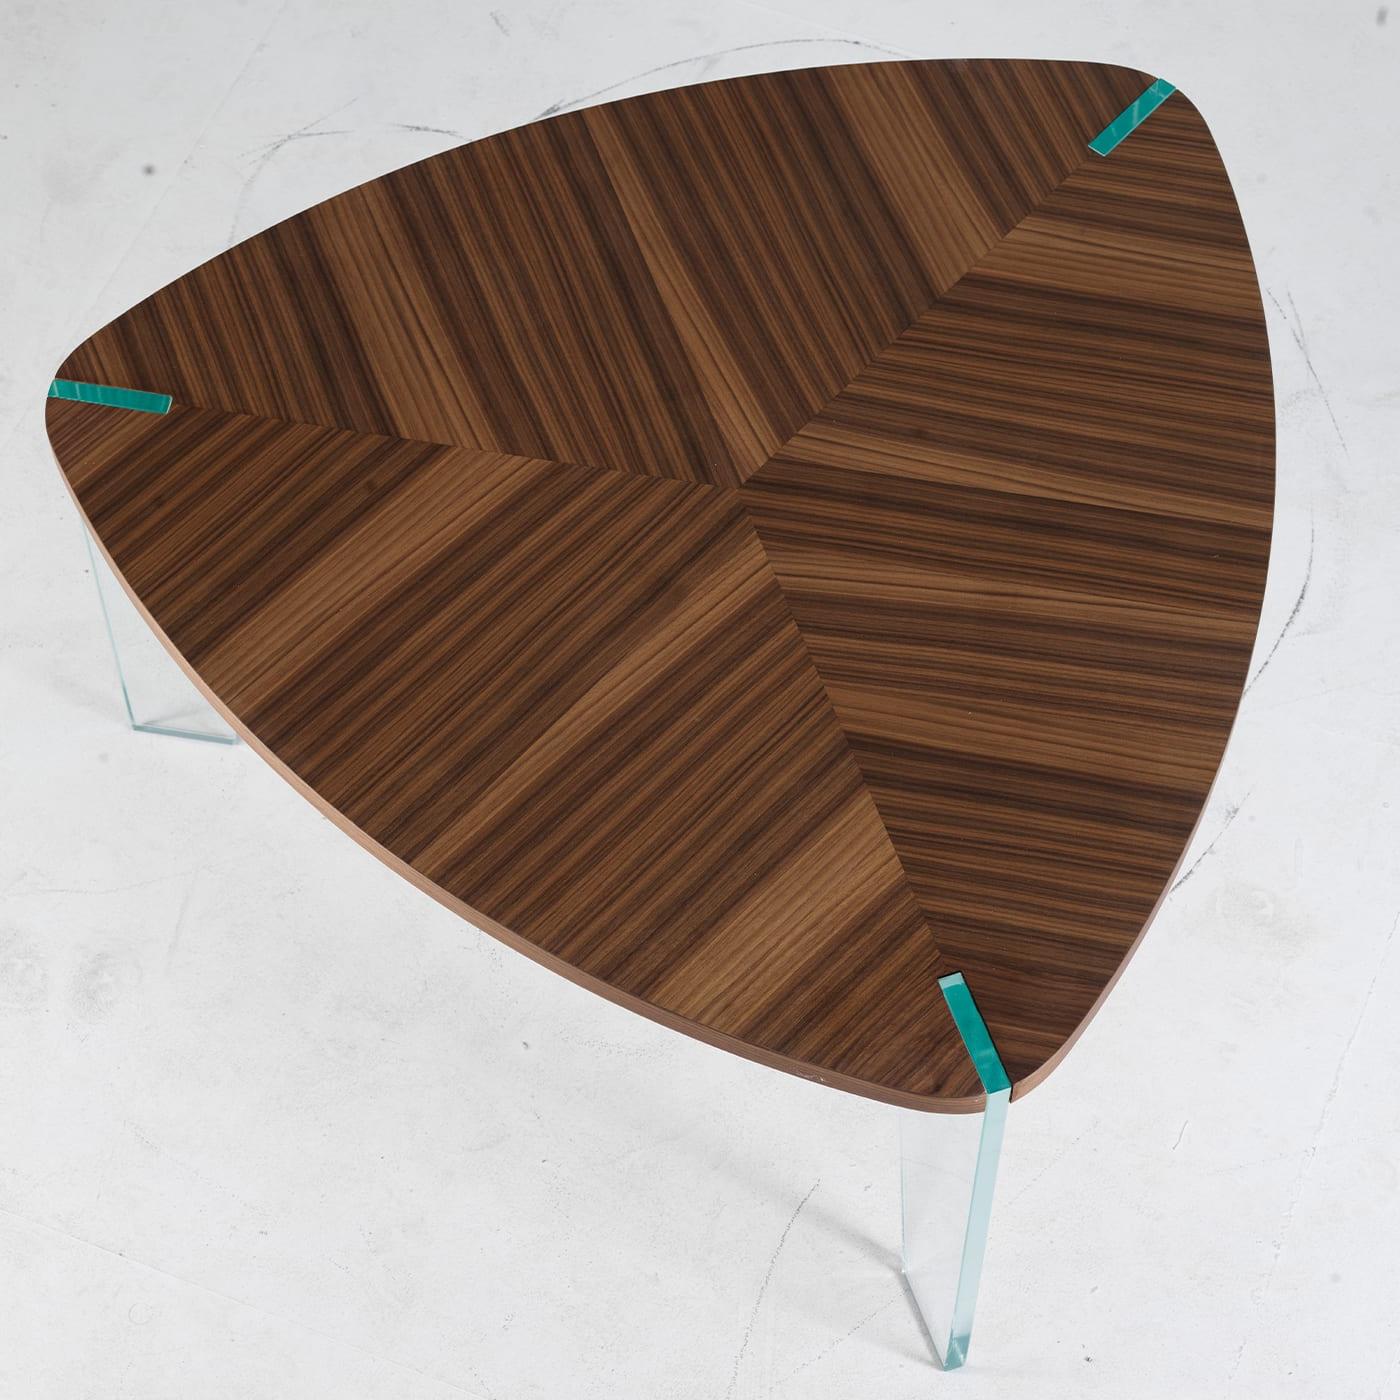 Sospeso Brown Coffee Table ☞ Dimensions: Ø 60 cm